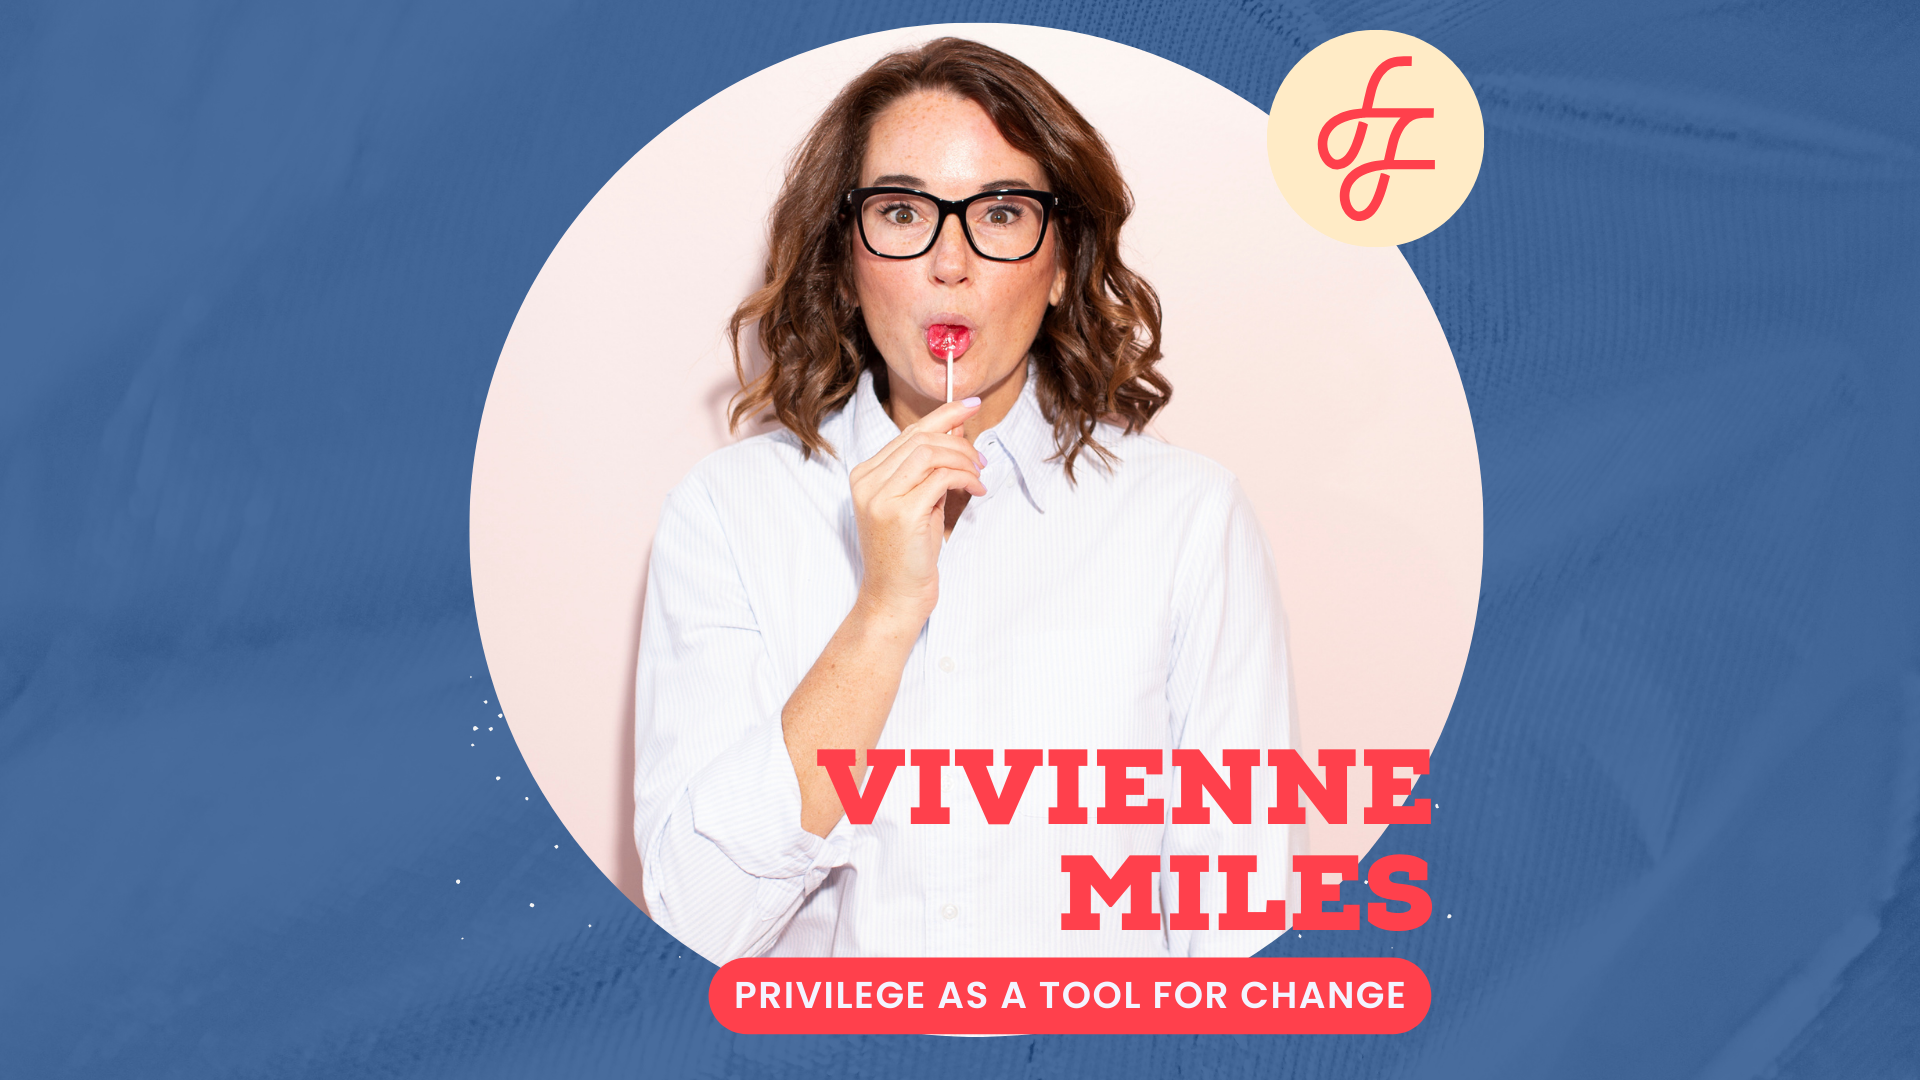 Vivienne Miles FF